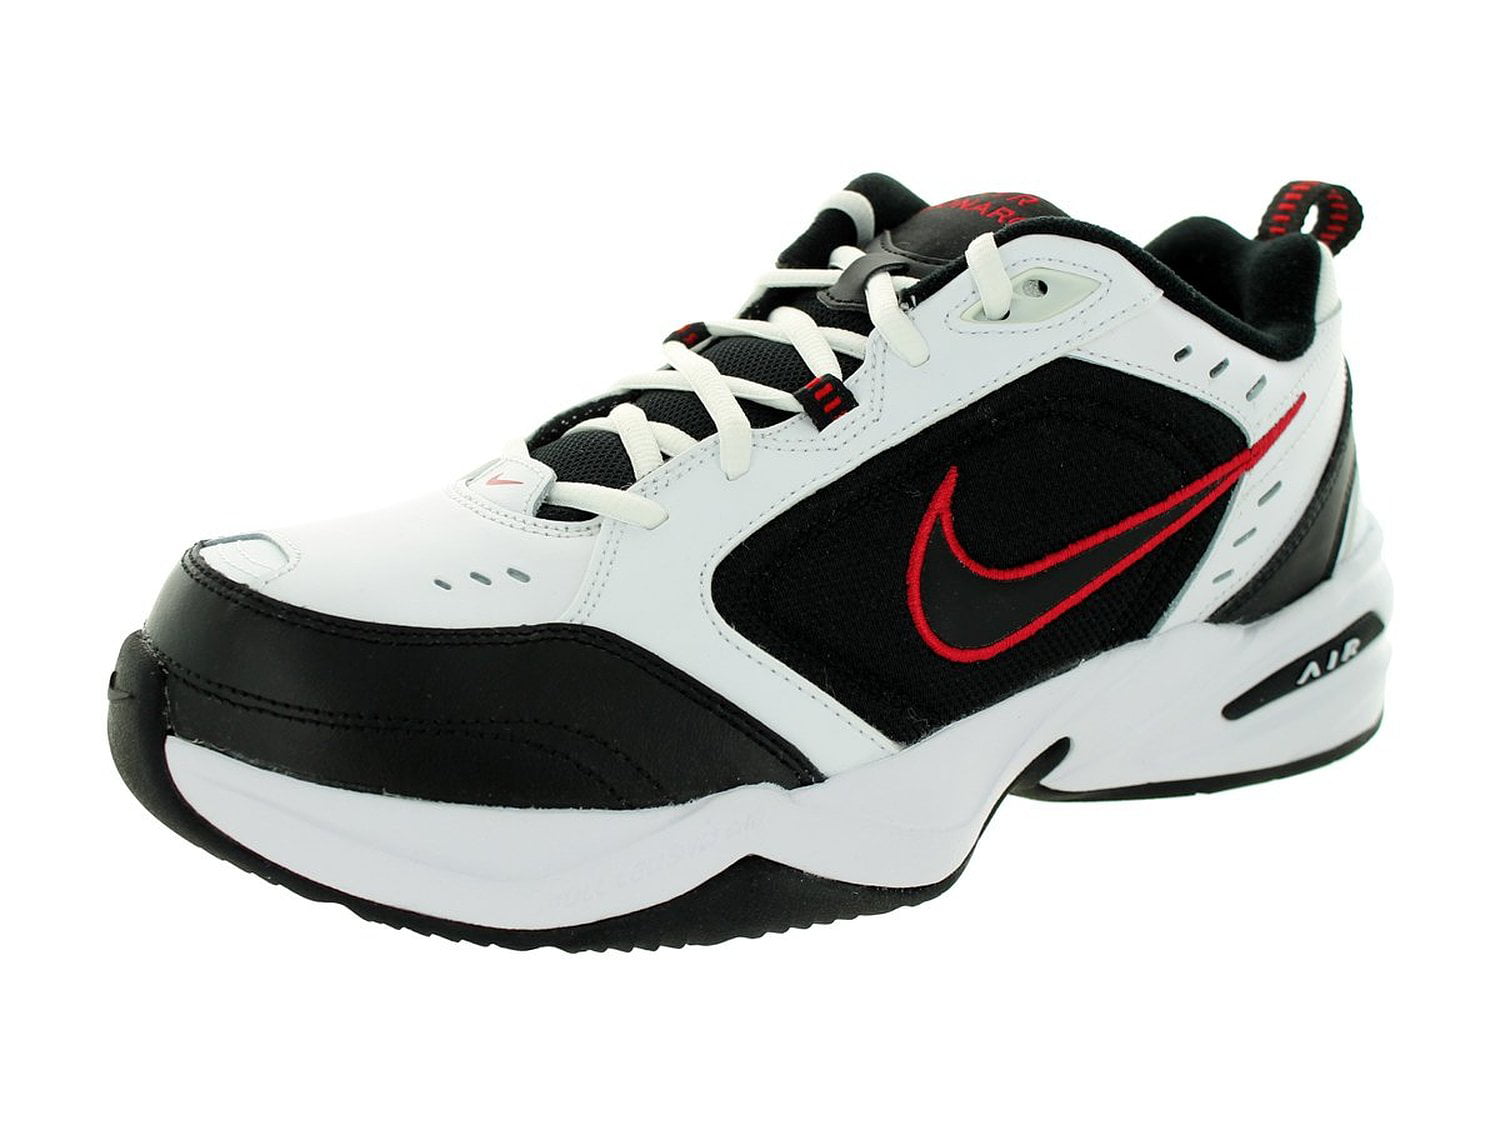 Nike - NIKE 415445-101: Air Monarch White/Black/Red Lifestyle Running ...